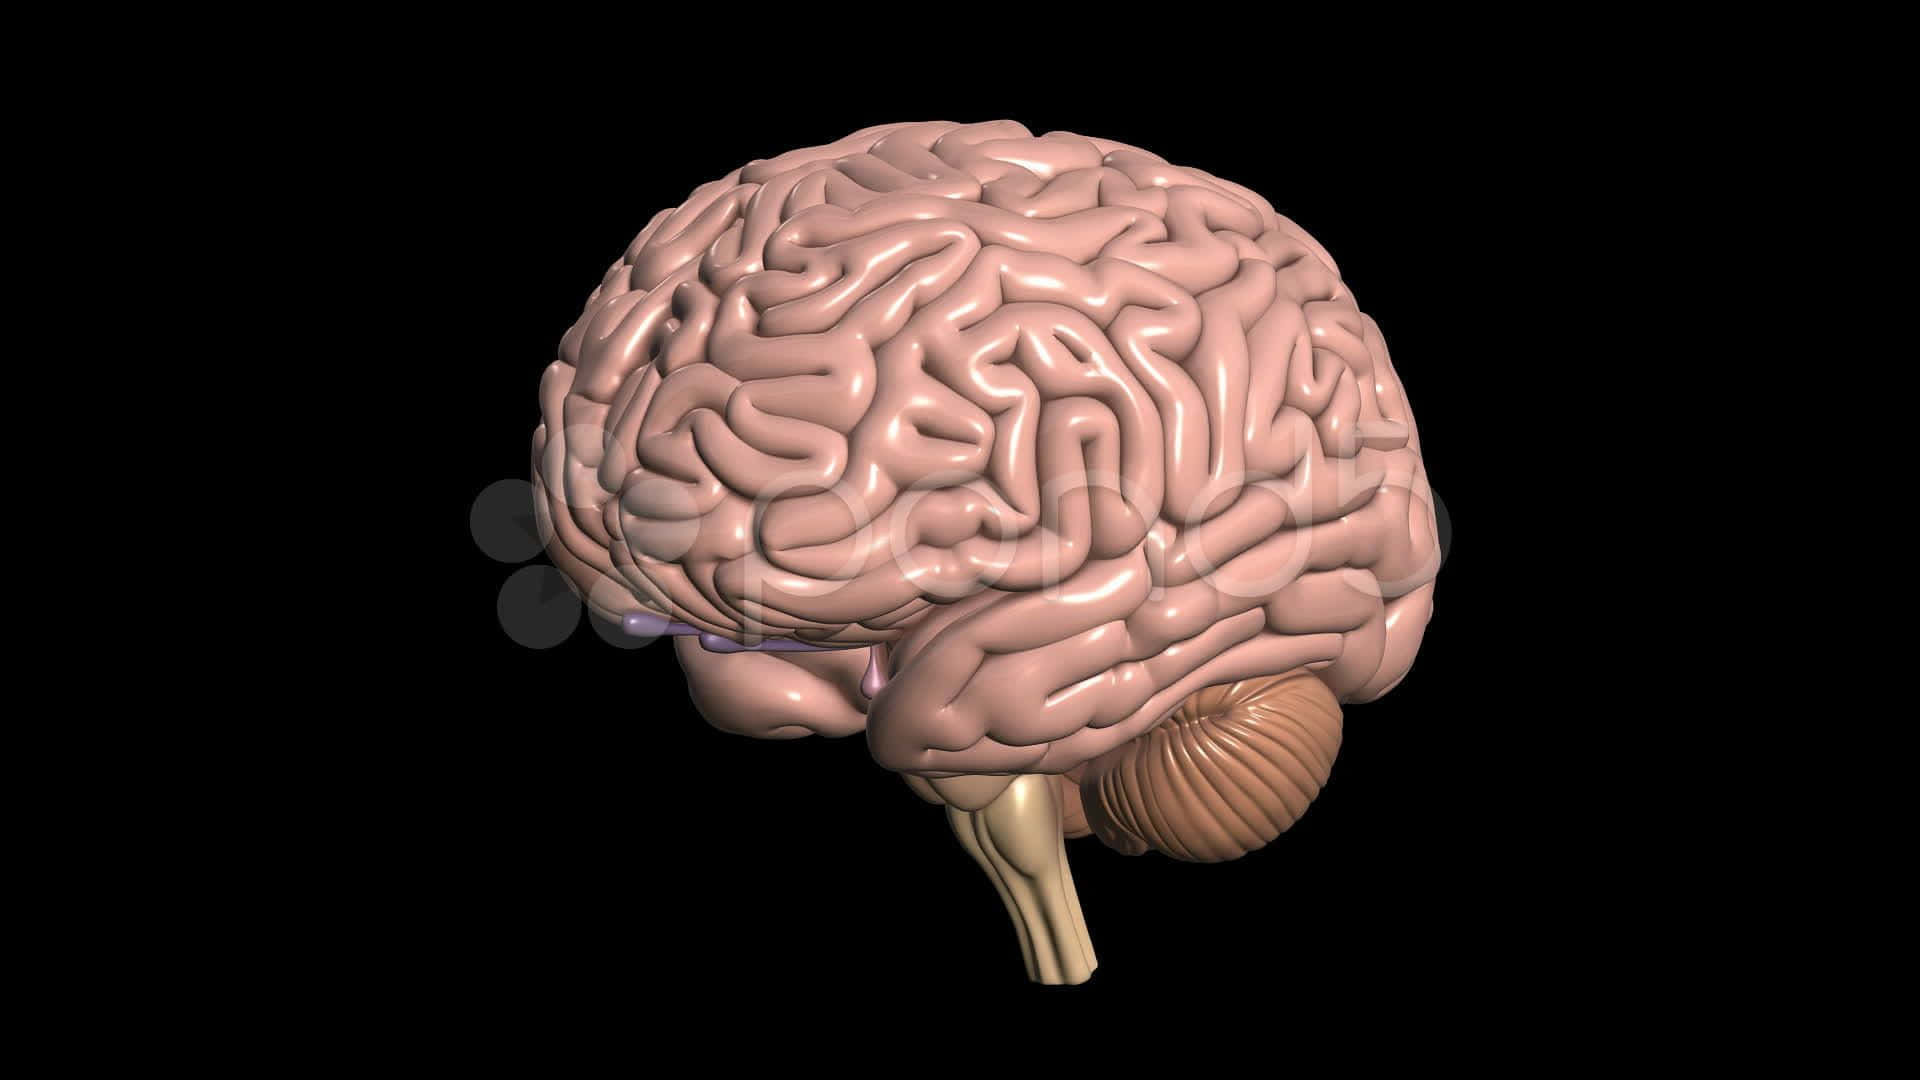 3d Model Of Human Brain Wallpaper